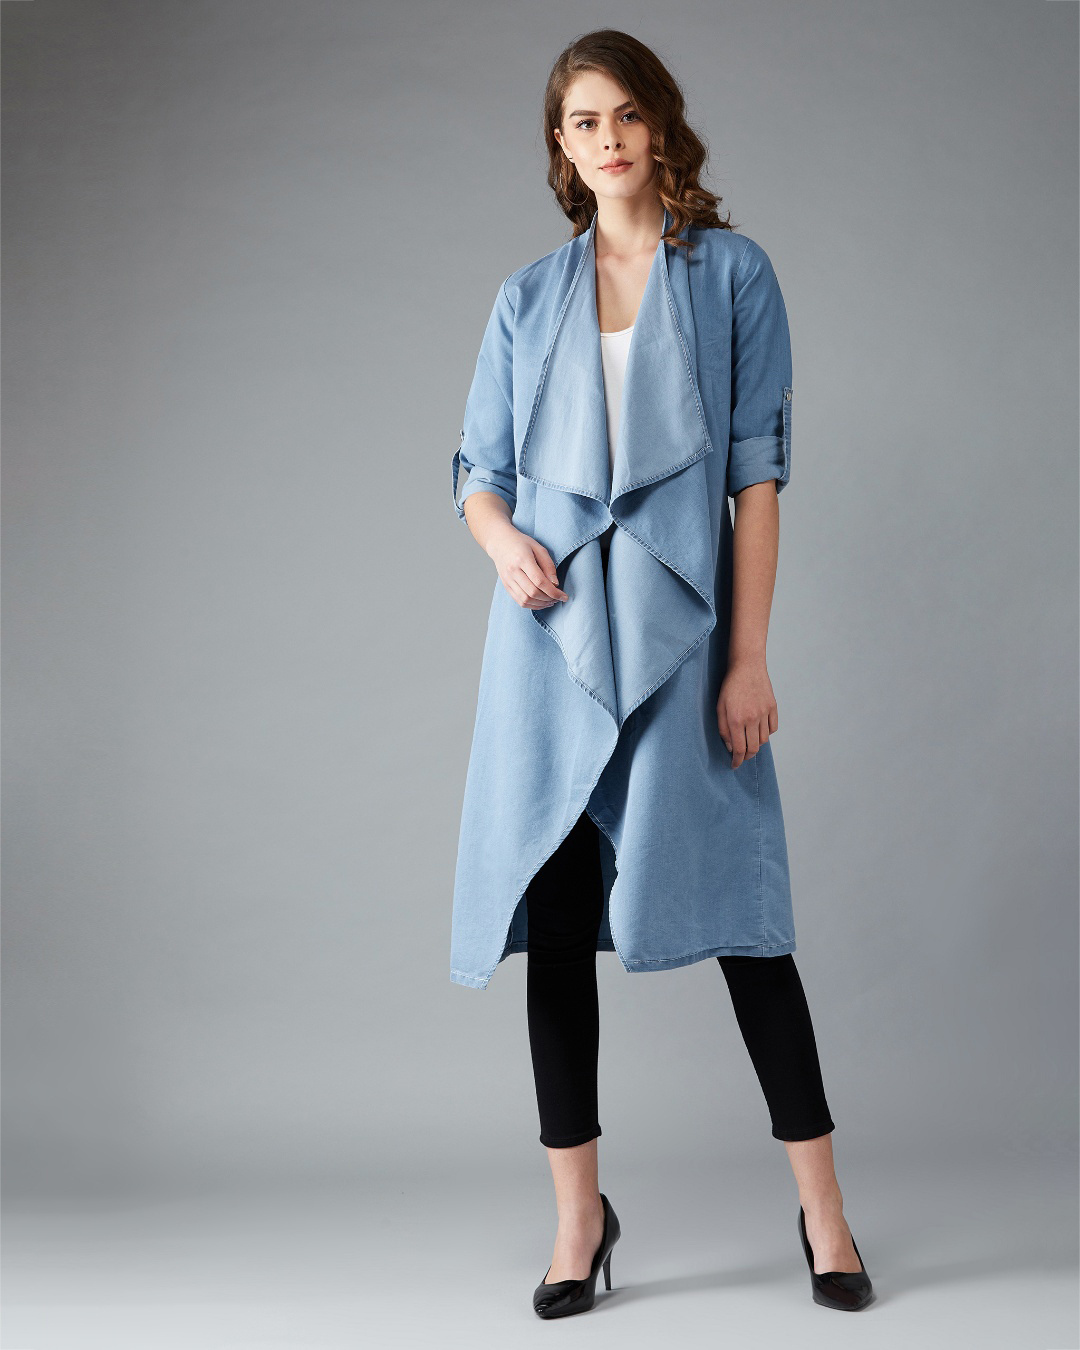 Jackets & Overcoats | Denim Shrug/Jacket | Freeup